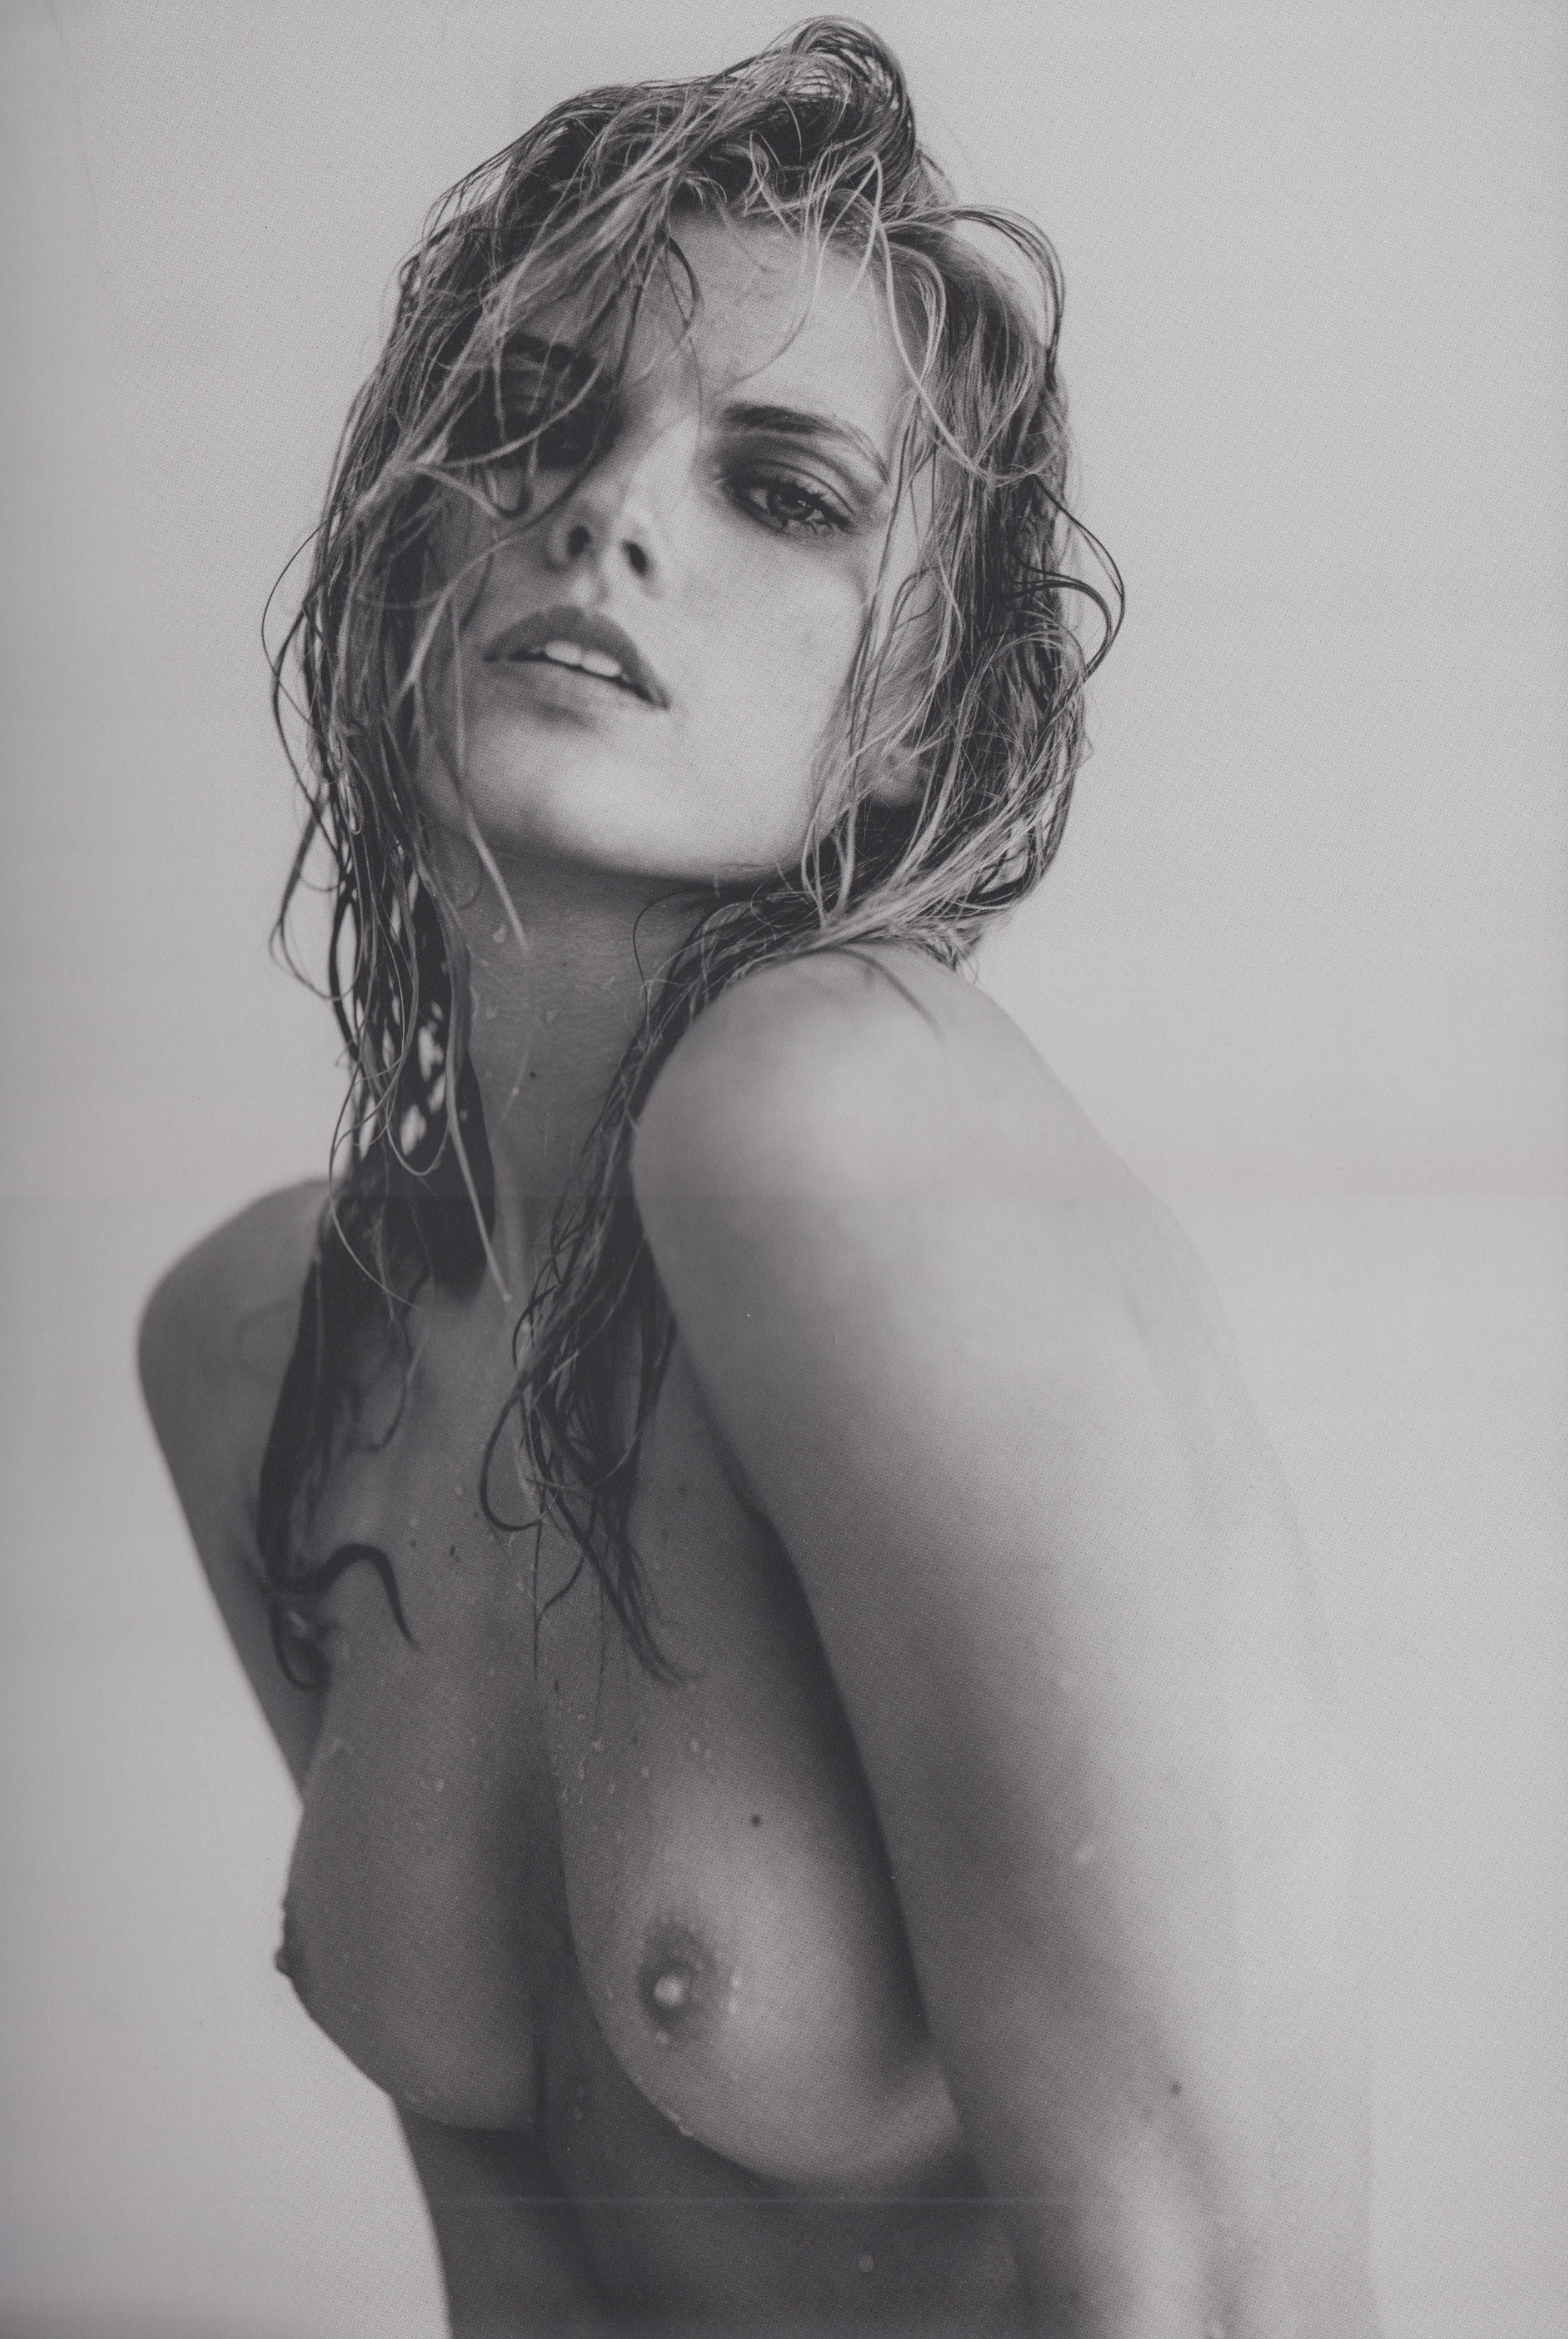 Erin foster nude 👉 👌 Erin Foster Nude Photos 2021. 